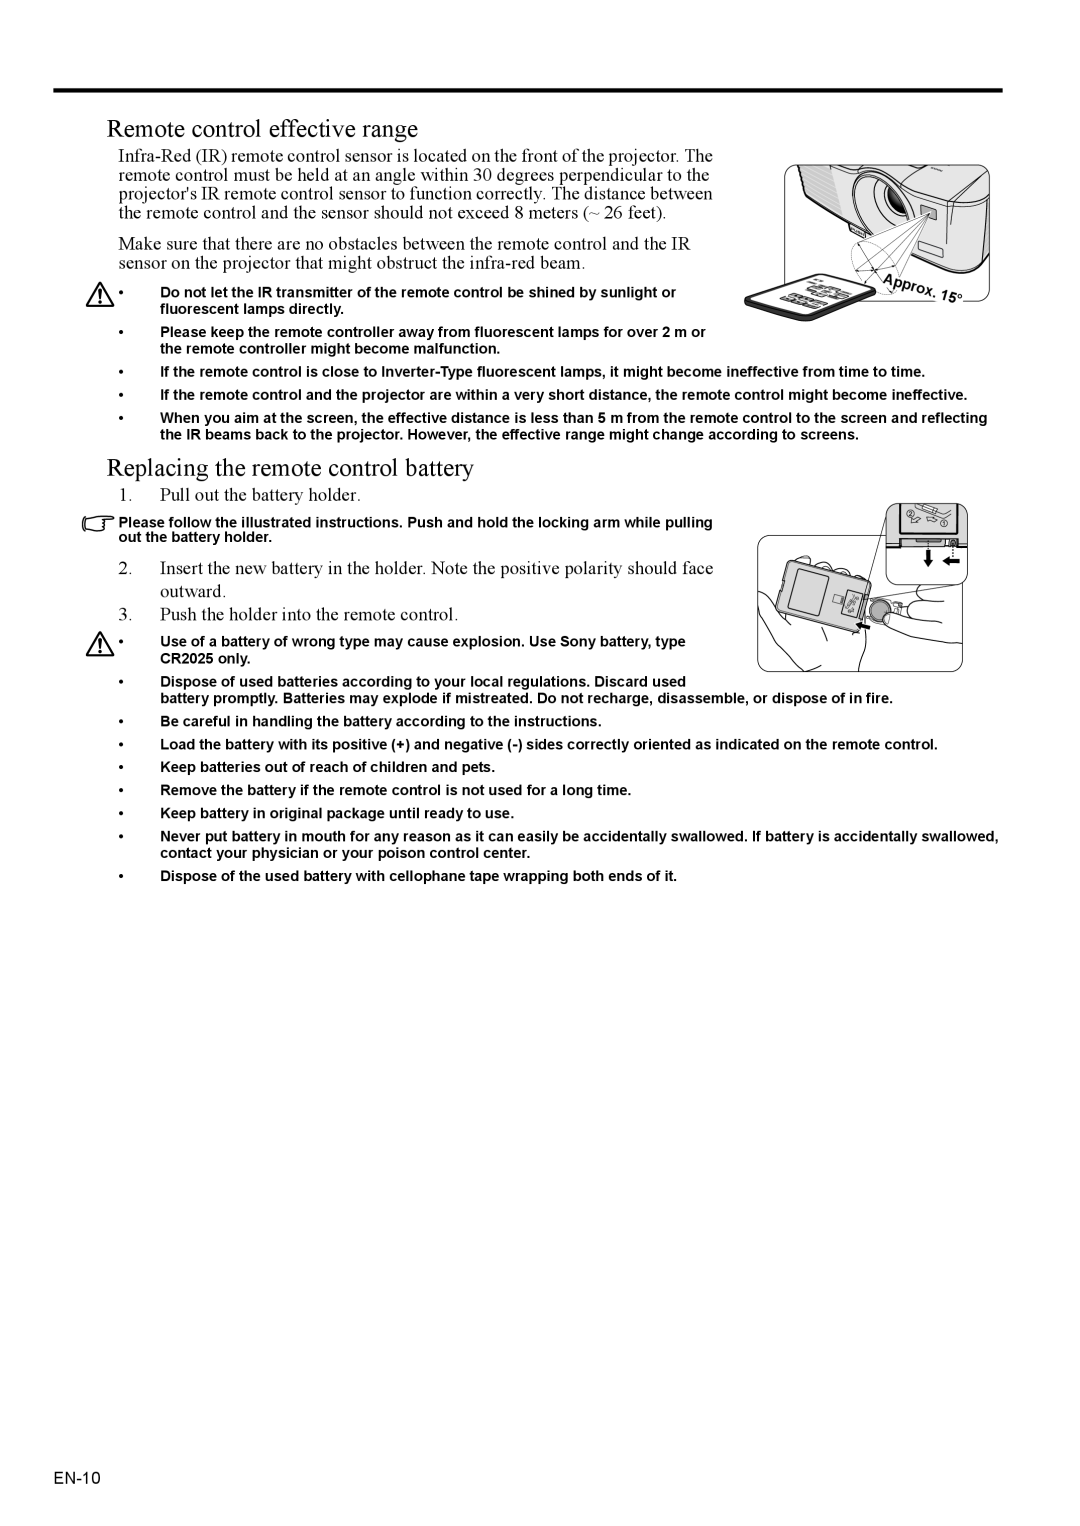 Mitsubishi Electronics EX200U user manual Remote control effective range, Replacing the remote control battery 